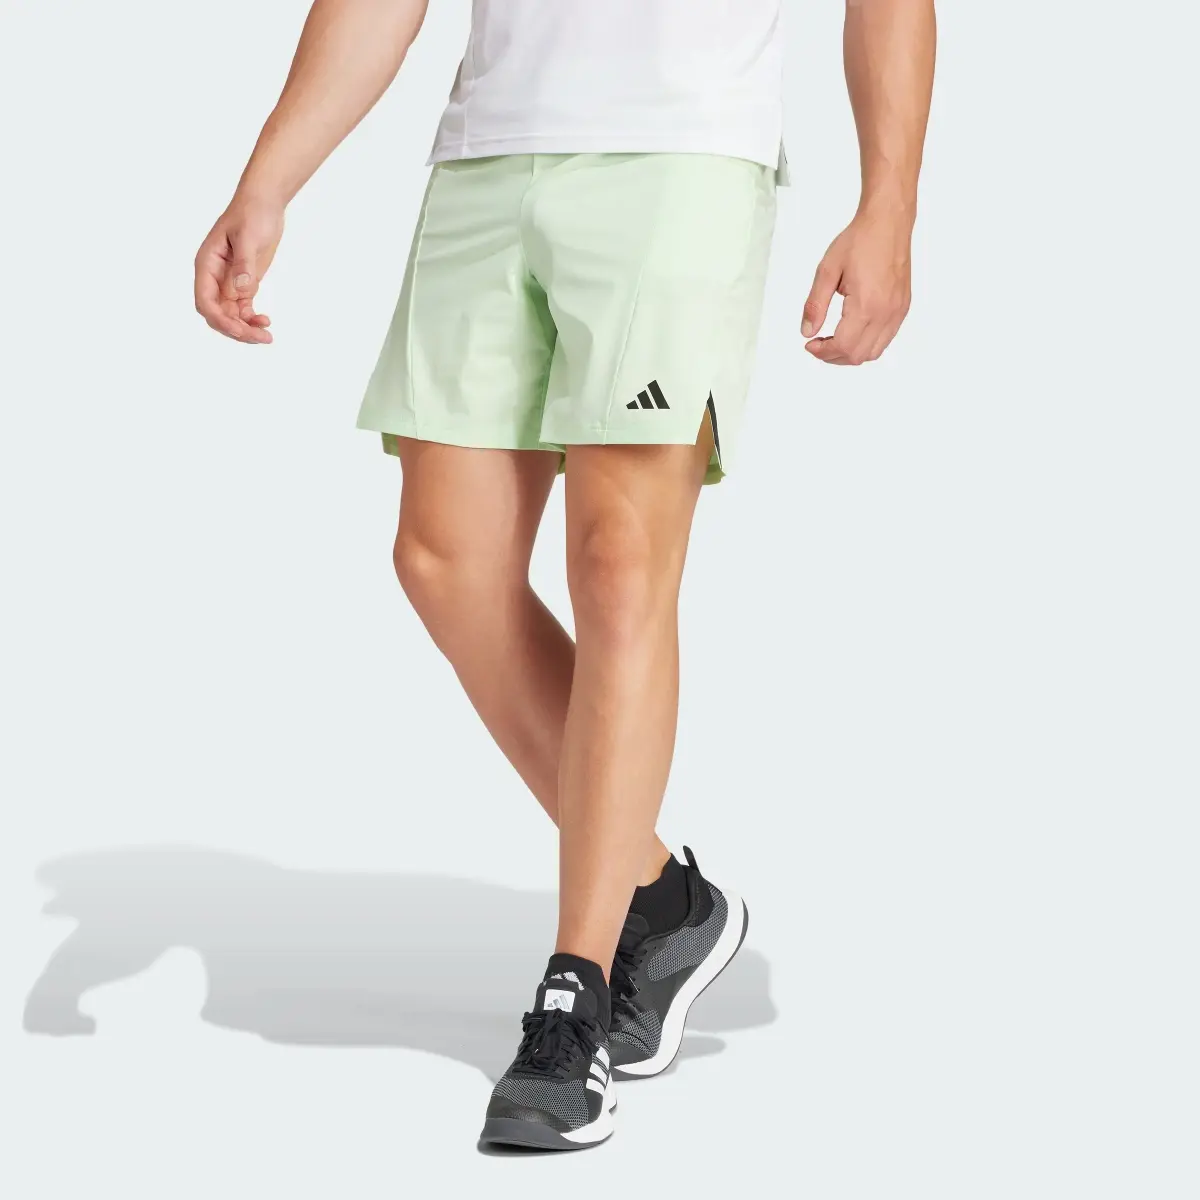 Adidas Short Designed for Training Workout. 1